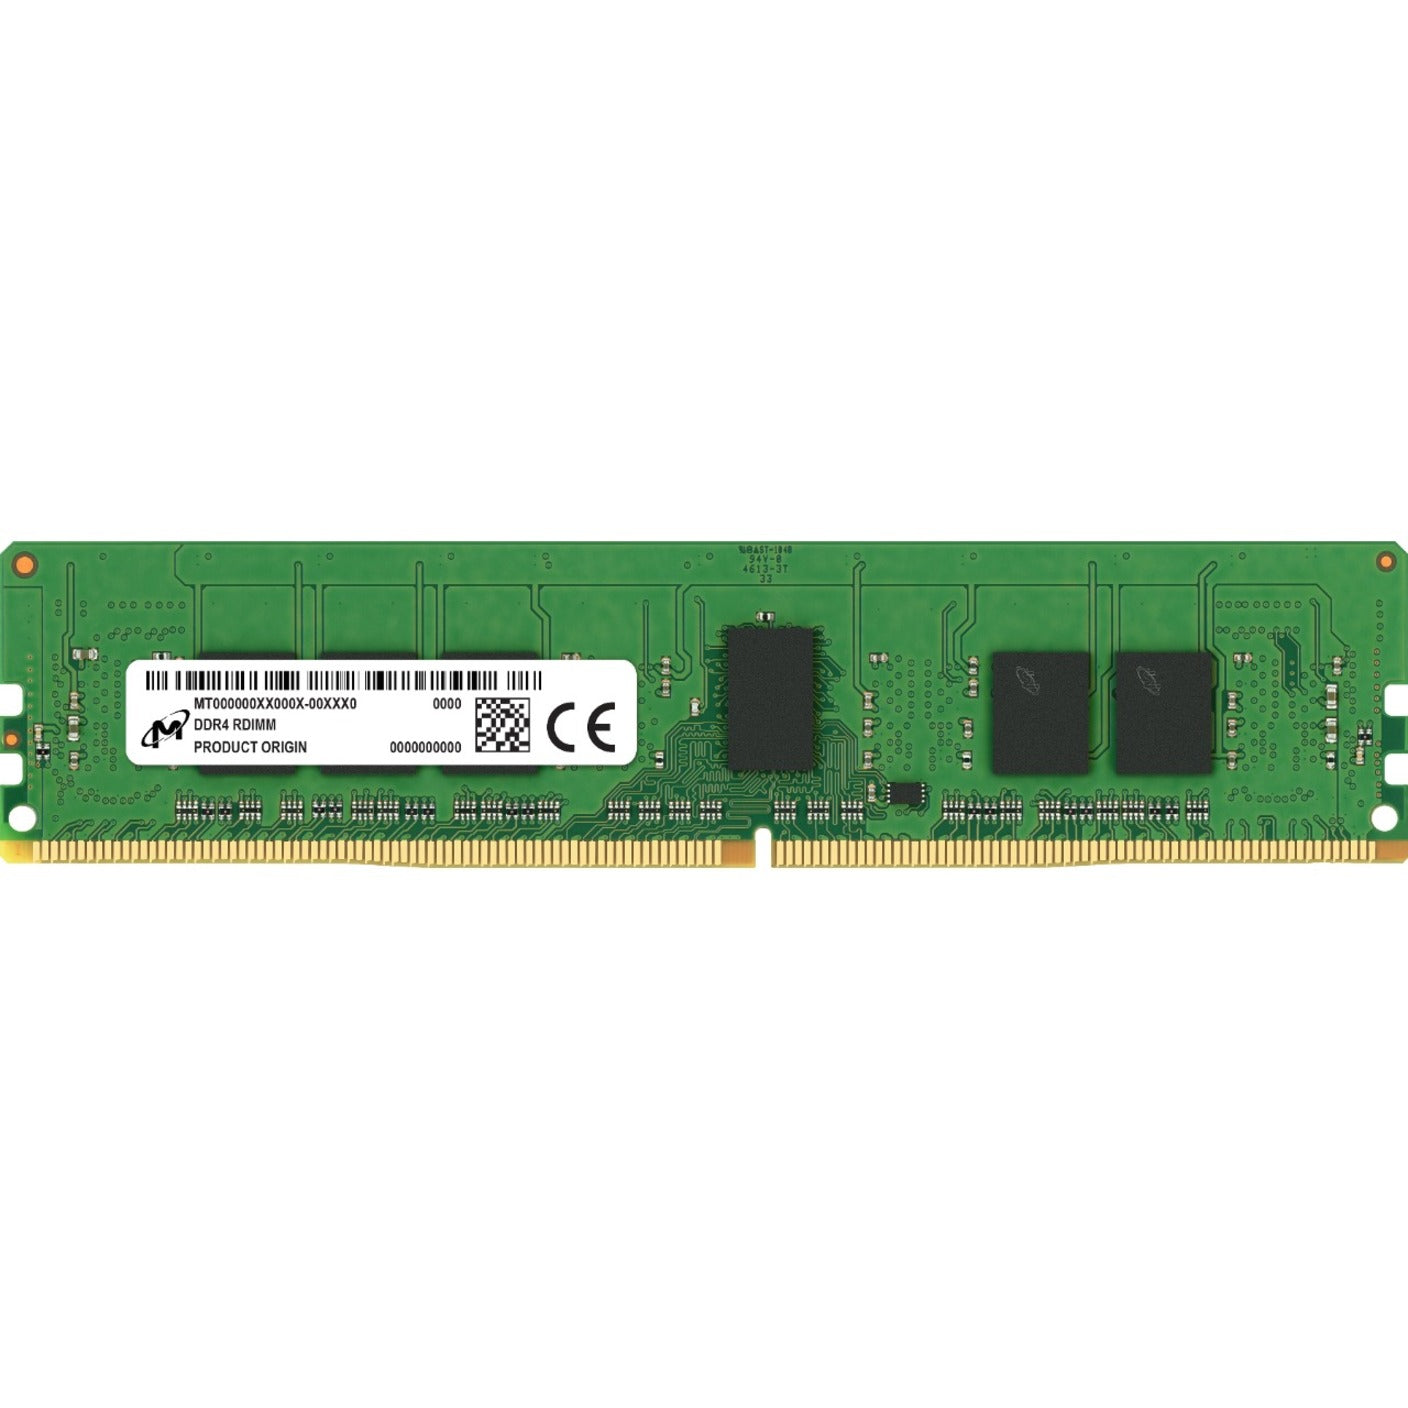 Crucial MTA9ASF1G72PZ-2G9E1 8GB DDR4 SDRAM Memory Module, Reliable Performance for Enhanced Computing